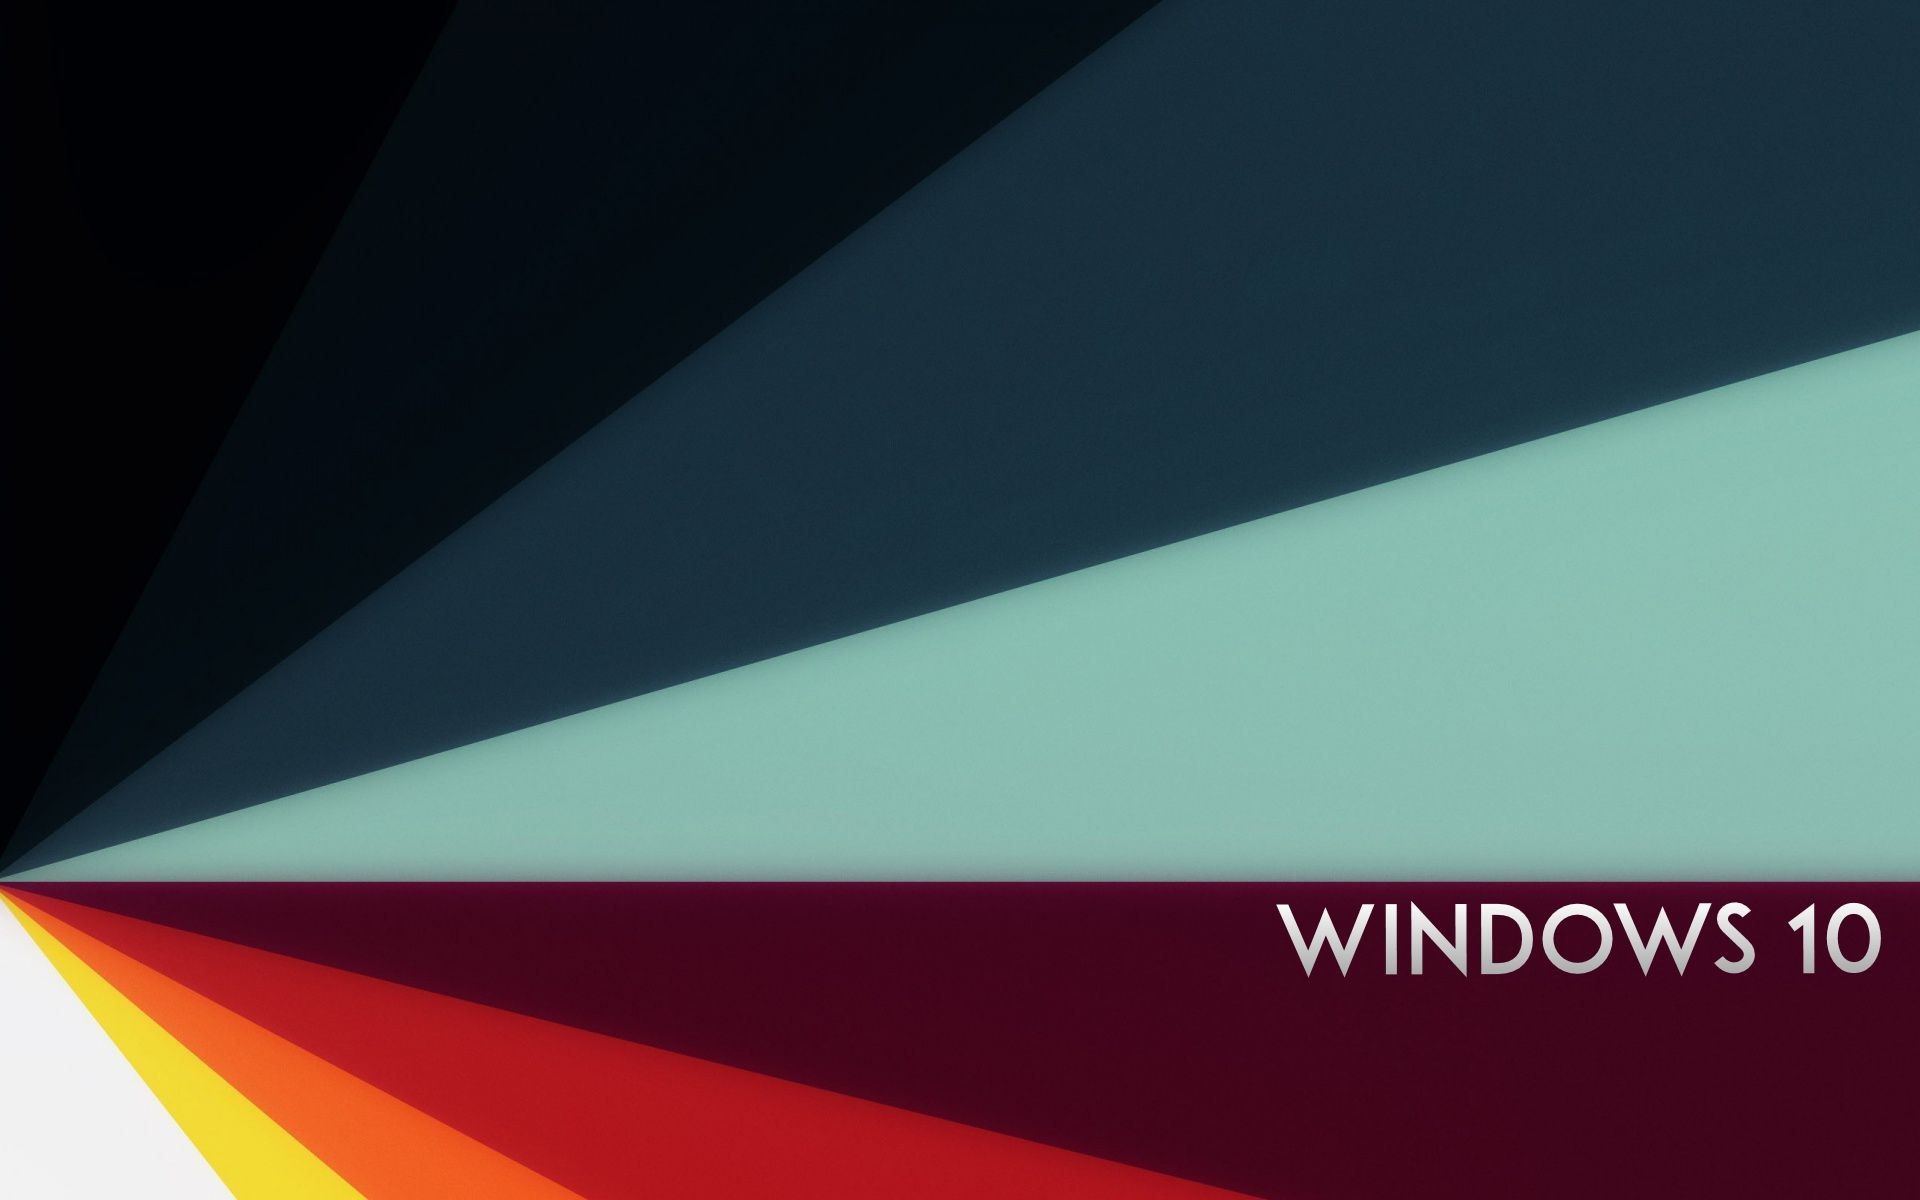 Wallpaper Windows 10, Abstract Background - Windows 10 Hd Wallpapers For Desktop Background - HD Wallpaper 